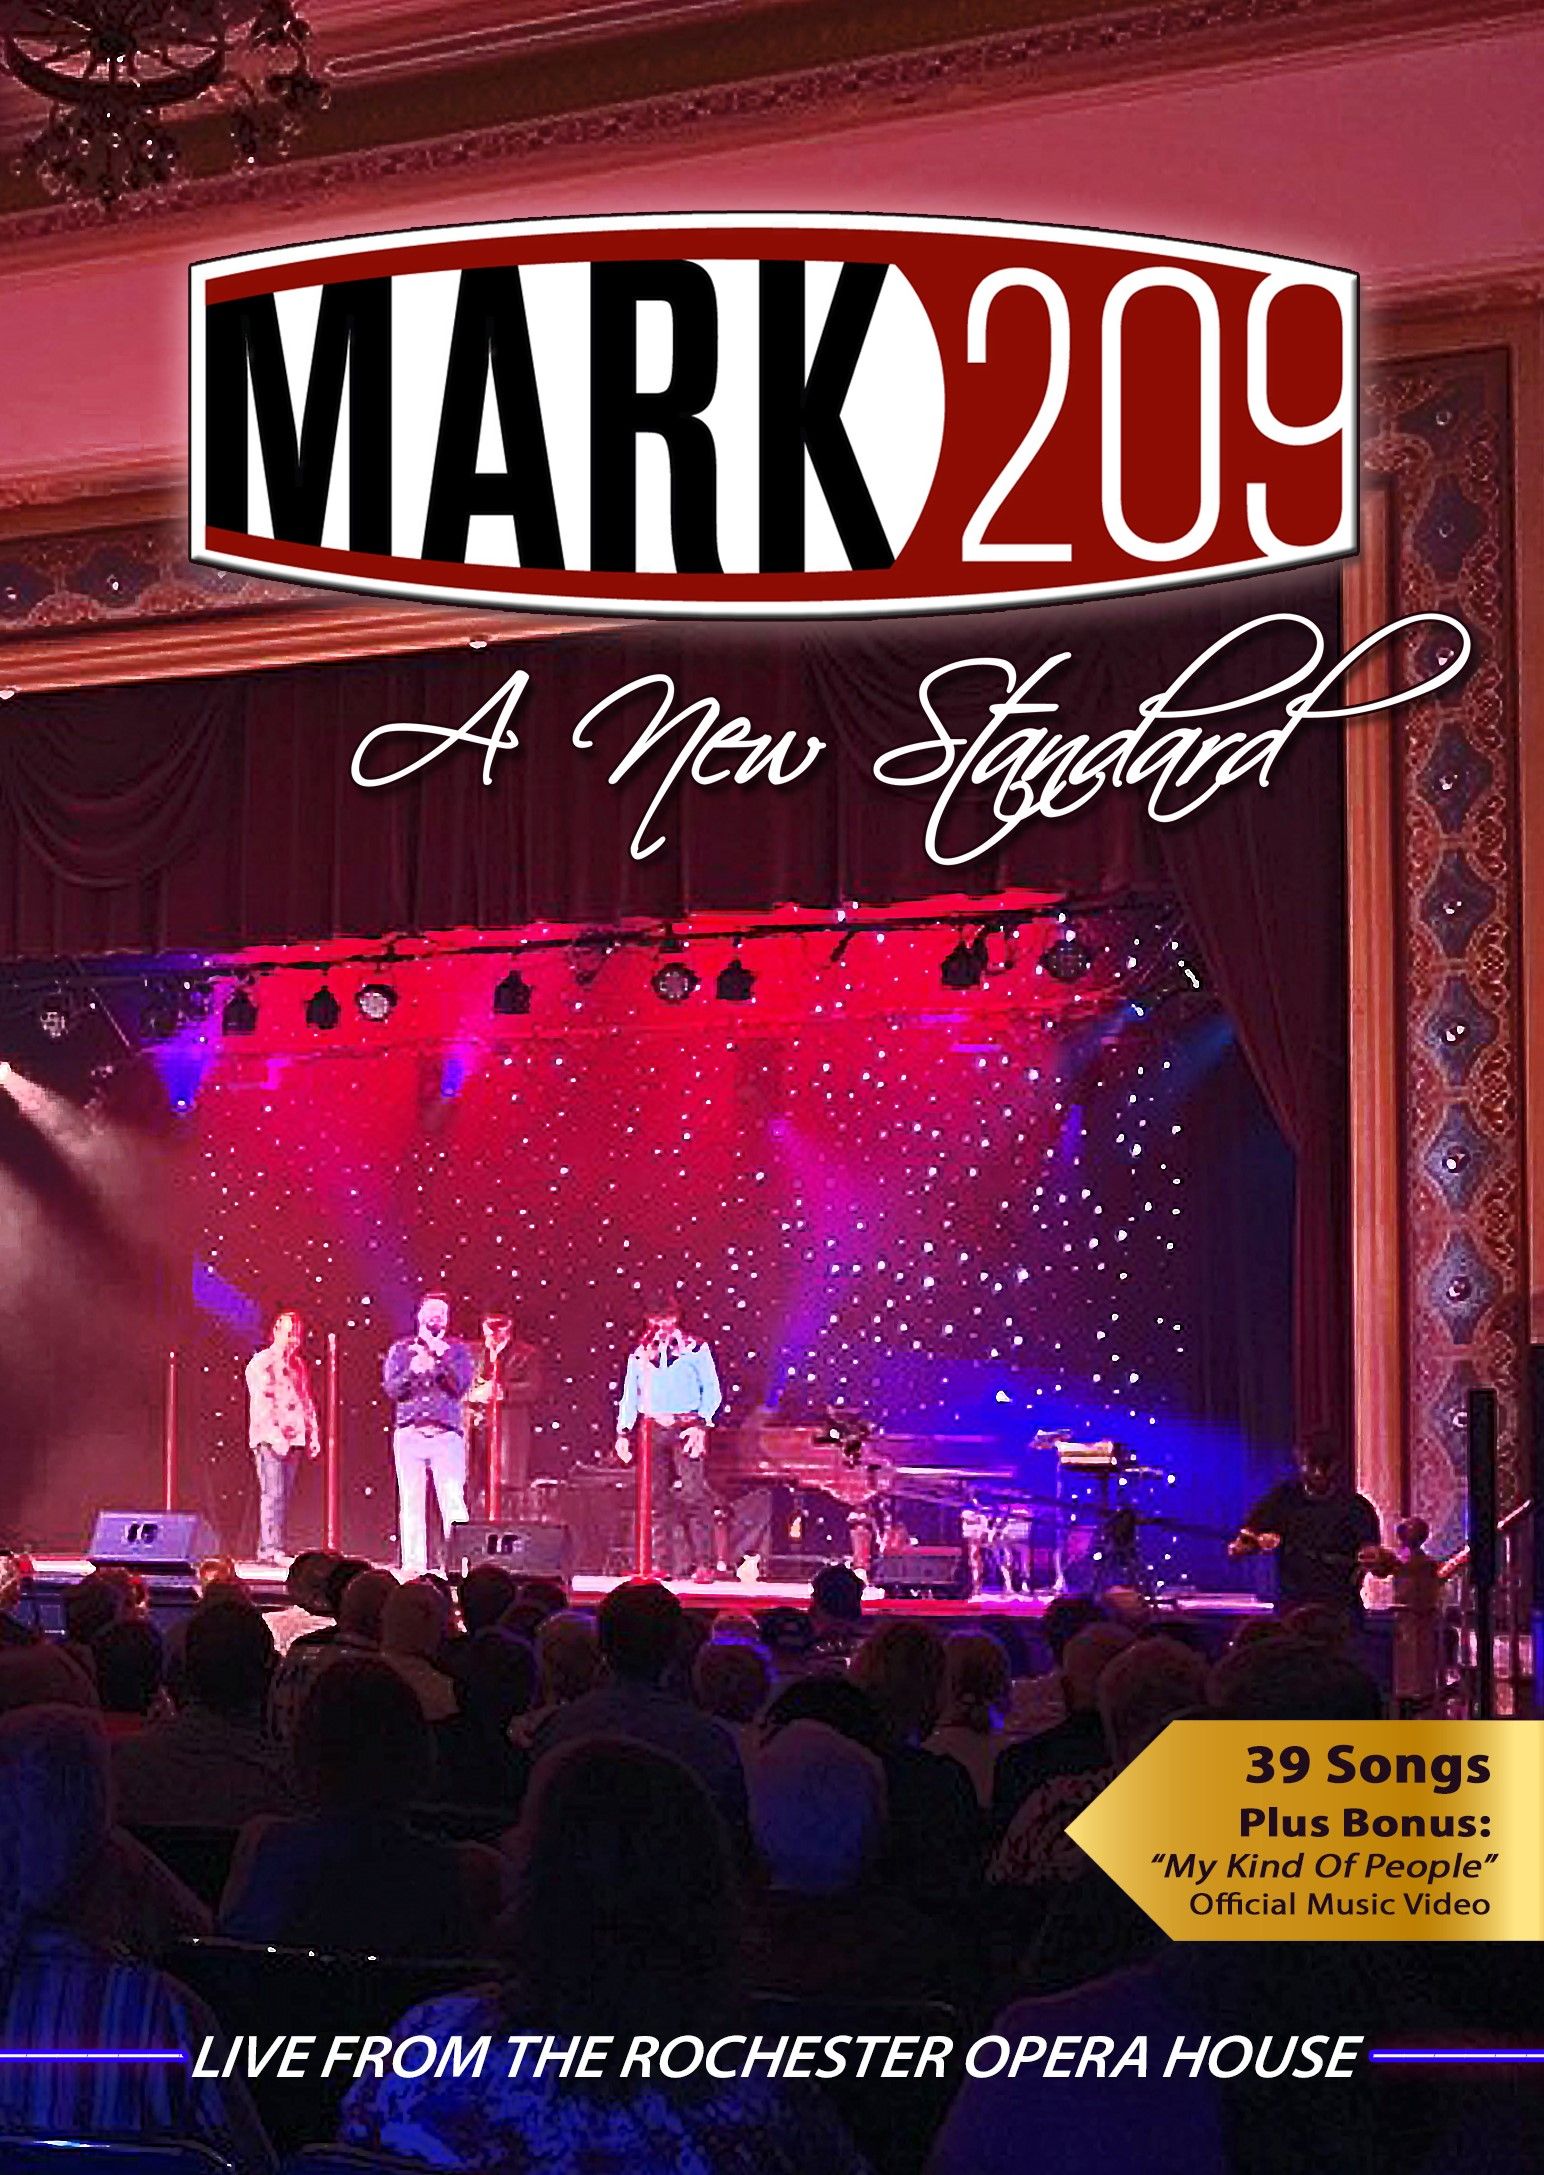 MARK209 Releases Live Concert Video